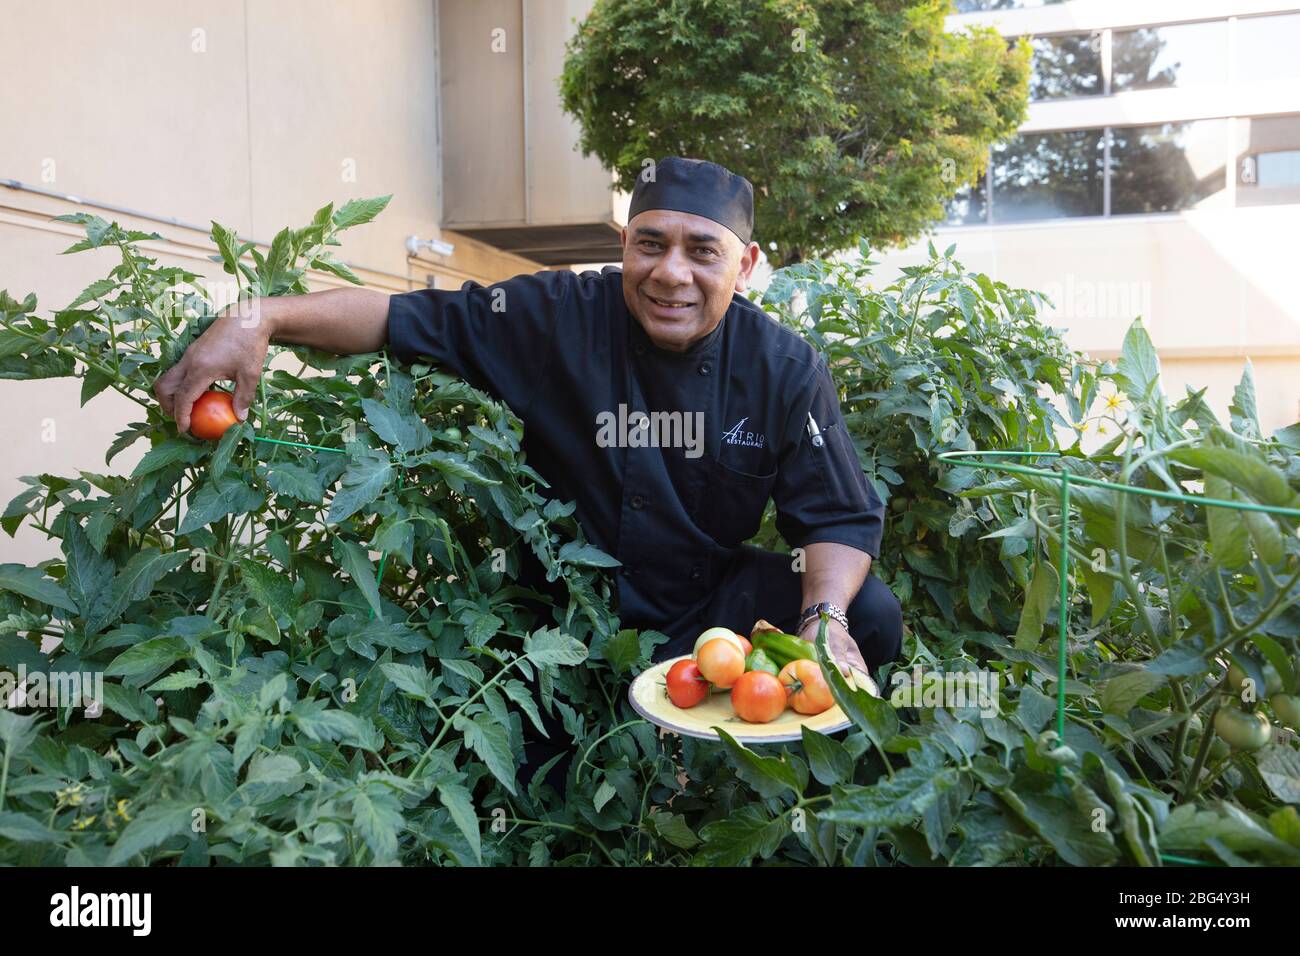 Hispanic man pics tomatoes in garden Stock Photo